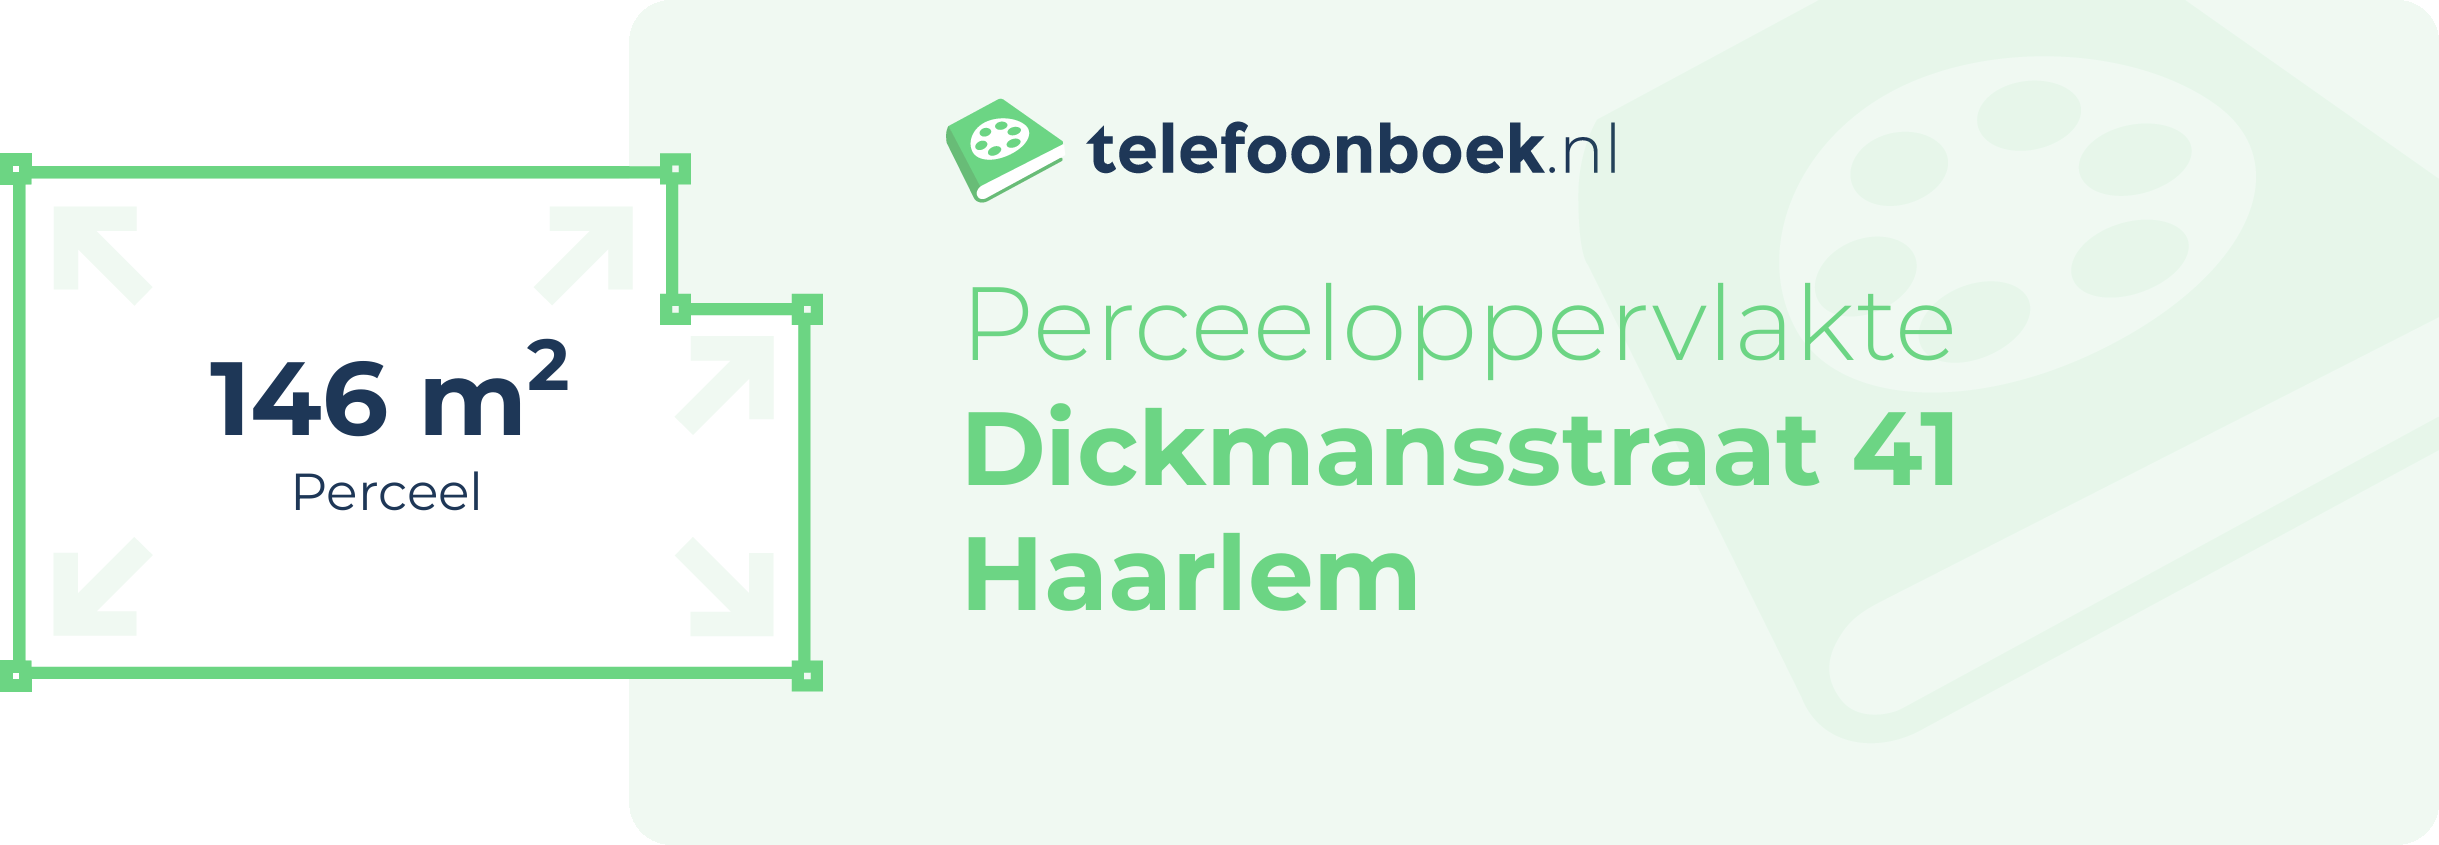 Perceeloppervlakte Dickmansstraat 41 Haarlem